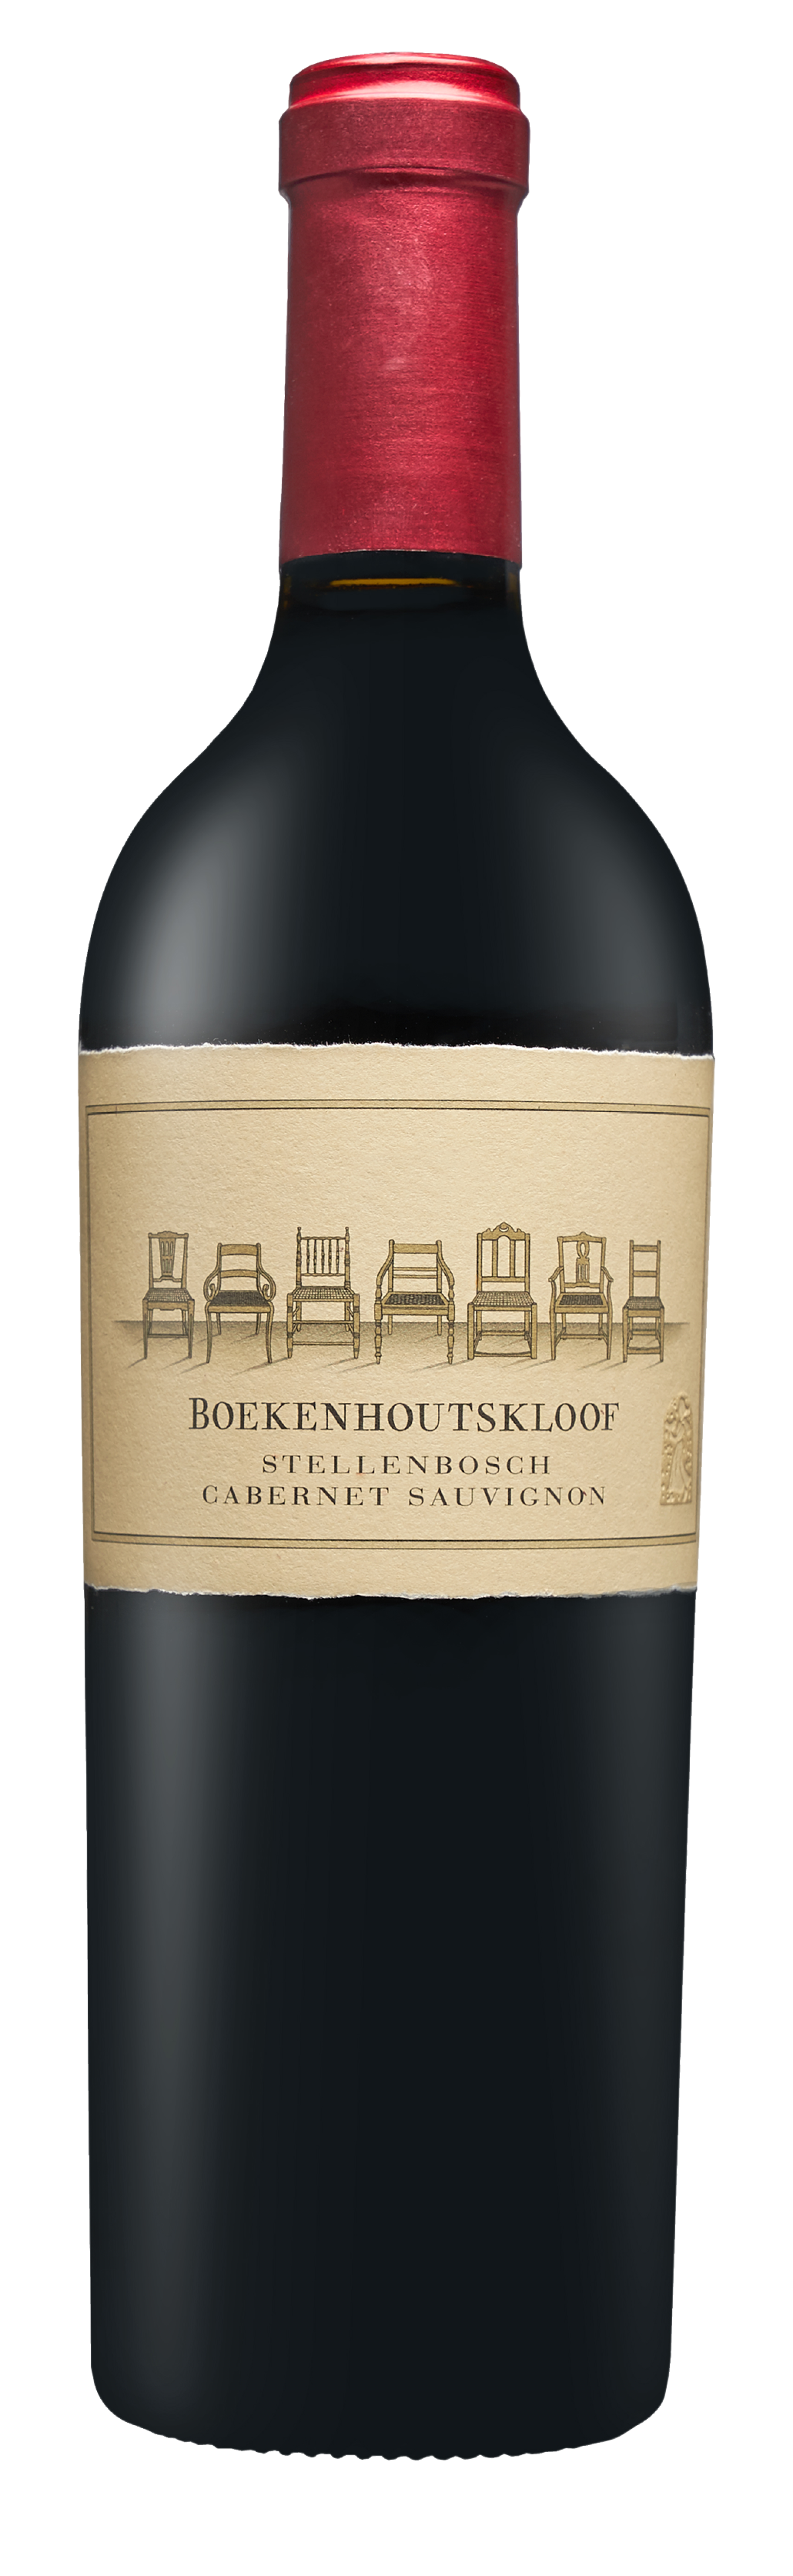 Boekenhoutskloof<br />2019 Stellenbosch Cabernet Sauvignon<br>South Africa